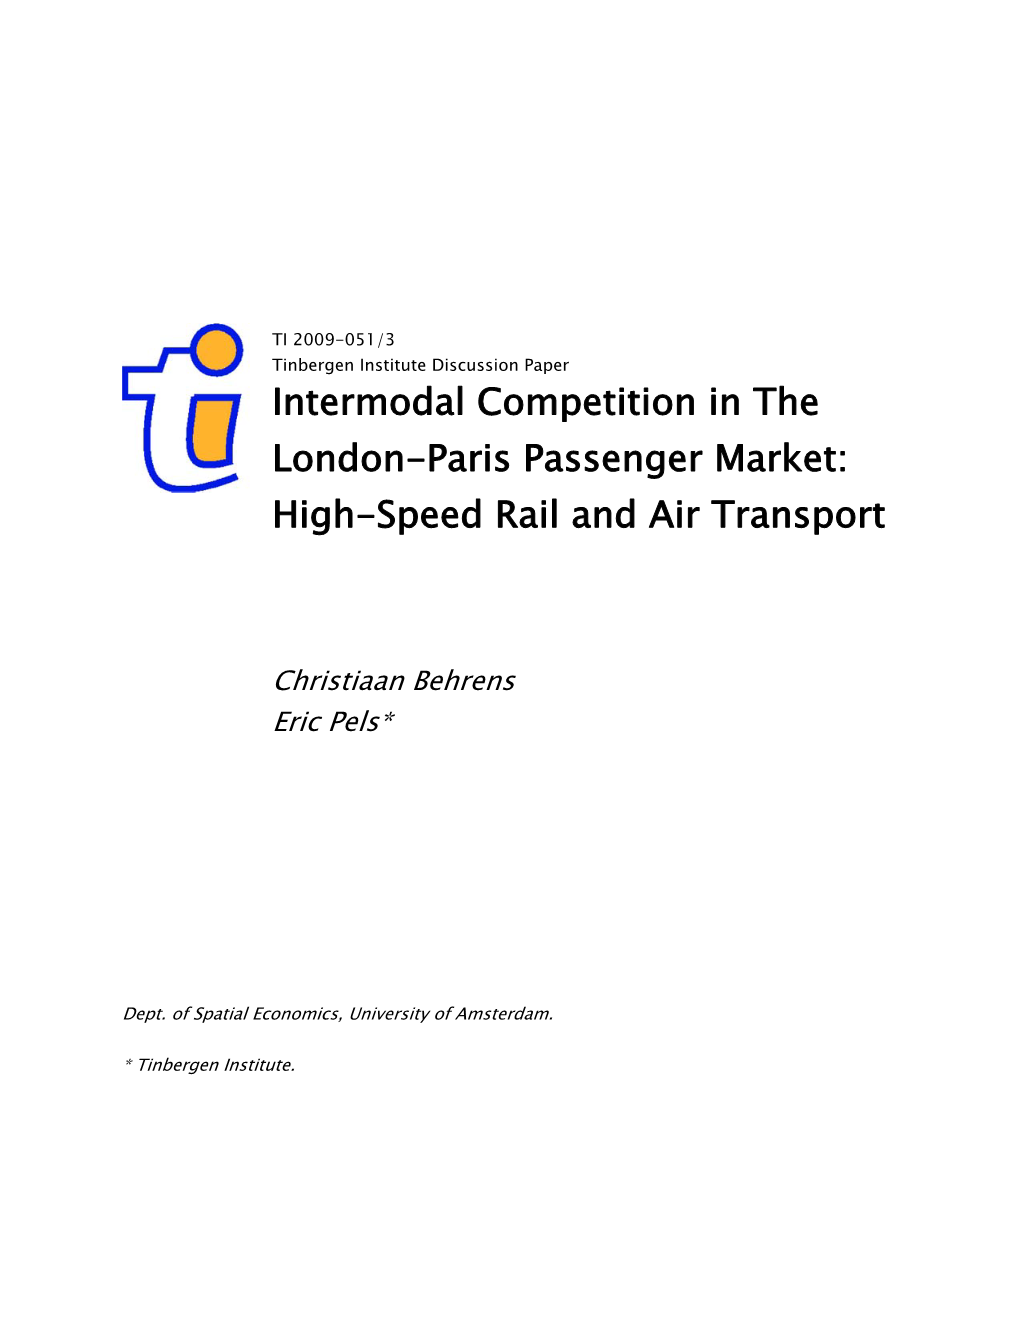 Intermodal Competition in the London-Paris Passenger Market